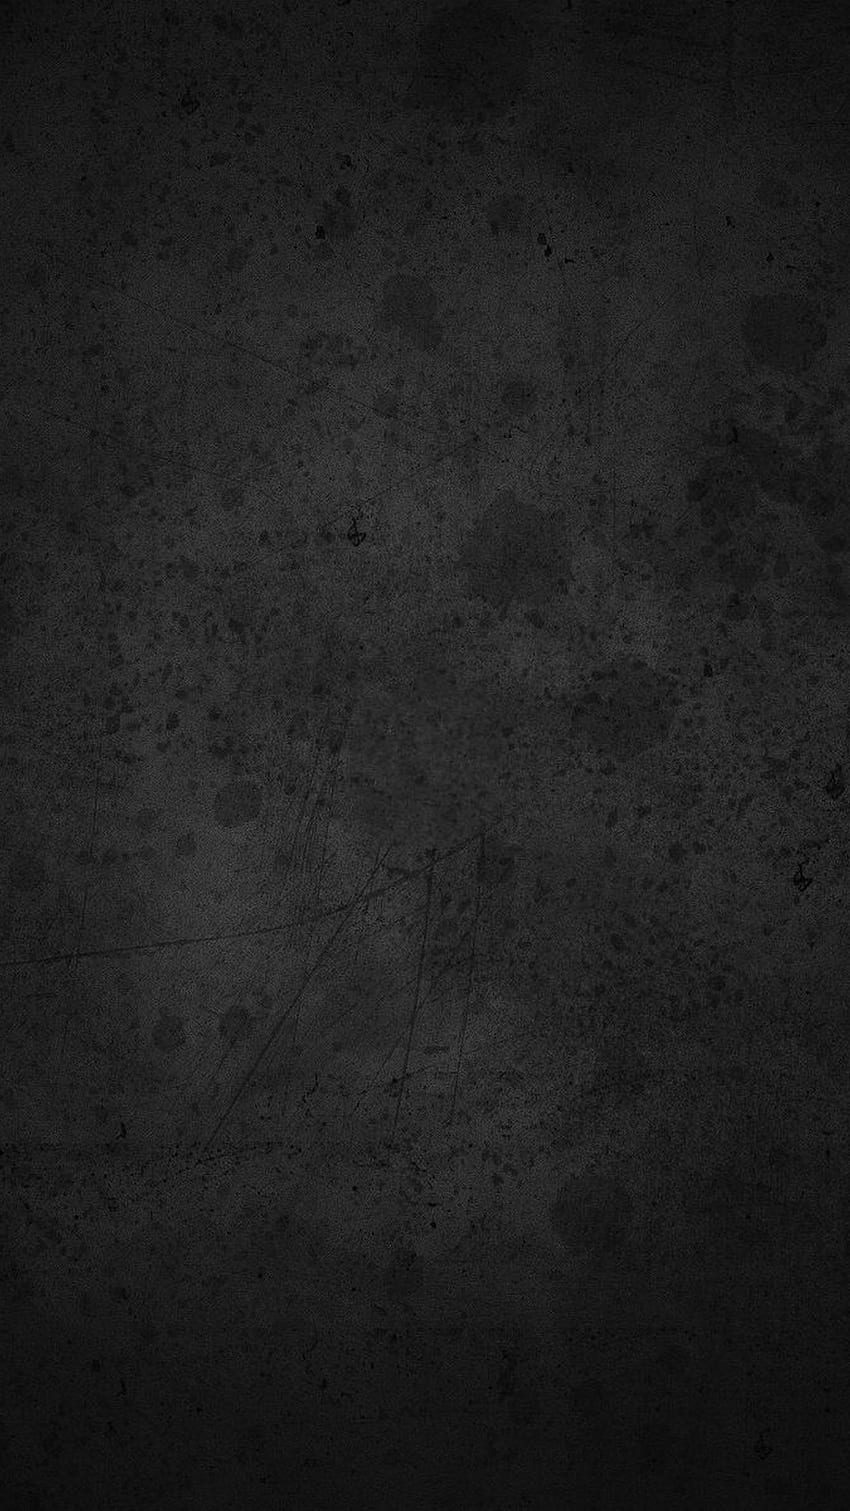 Concrete Texture Abstract Móvil 4590 - iPhone 7 Plus Negro - fondo de pantalla del teléfono